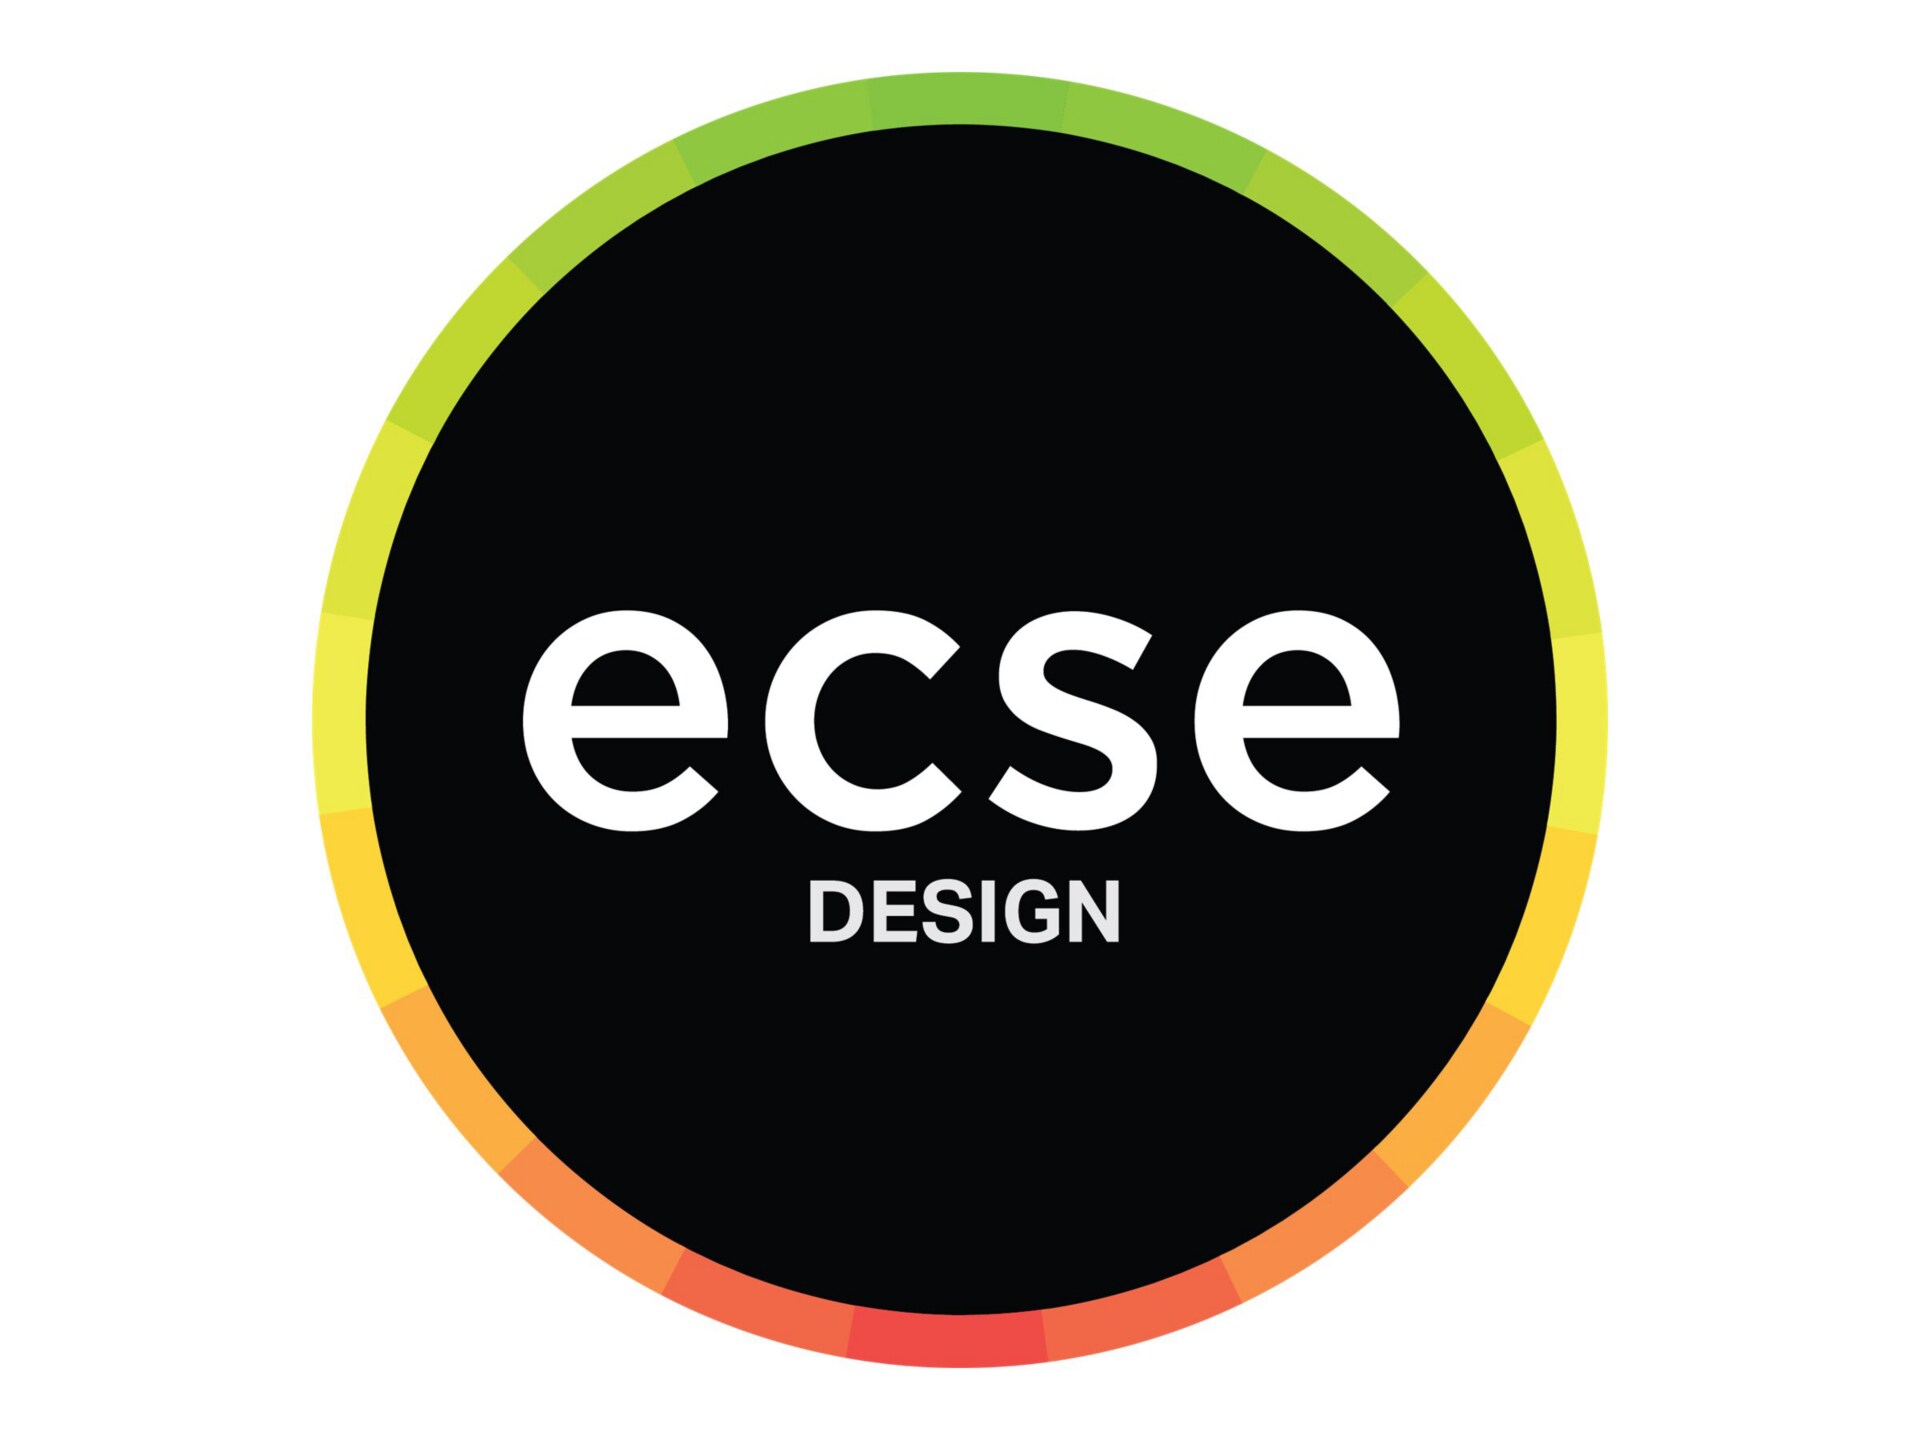 ECSE Design - Instructor-led training (ILT) - téléenseignement en direct